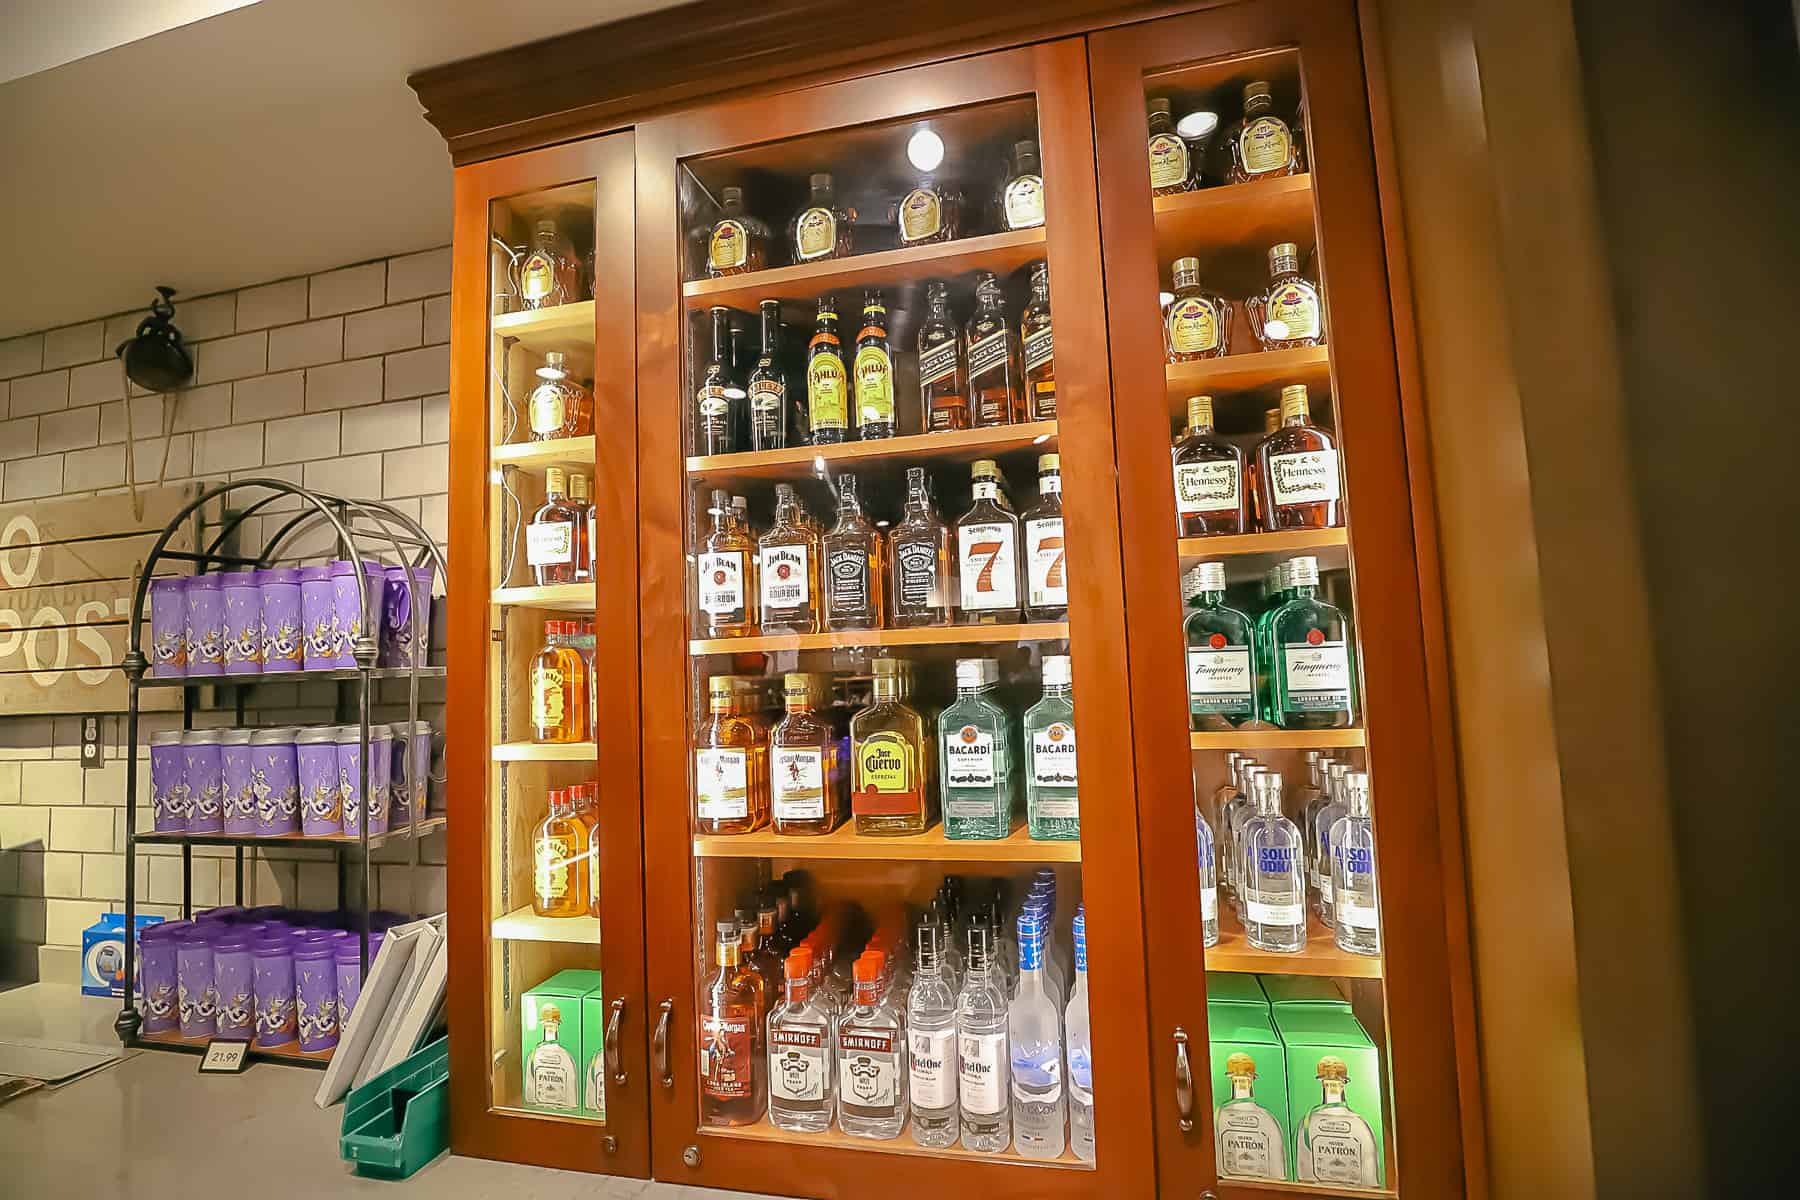 a case behind the register that displays various bottles of liquor at Disney's Caribbean Beach Resort 